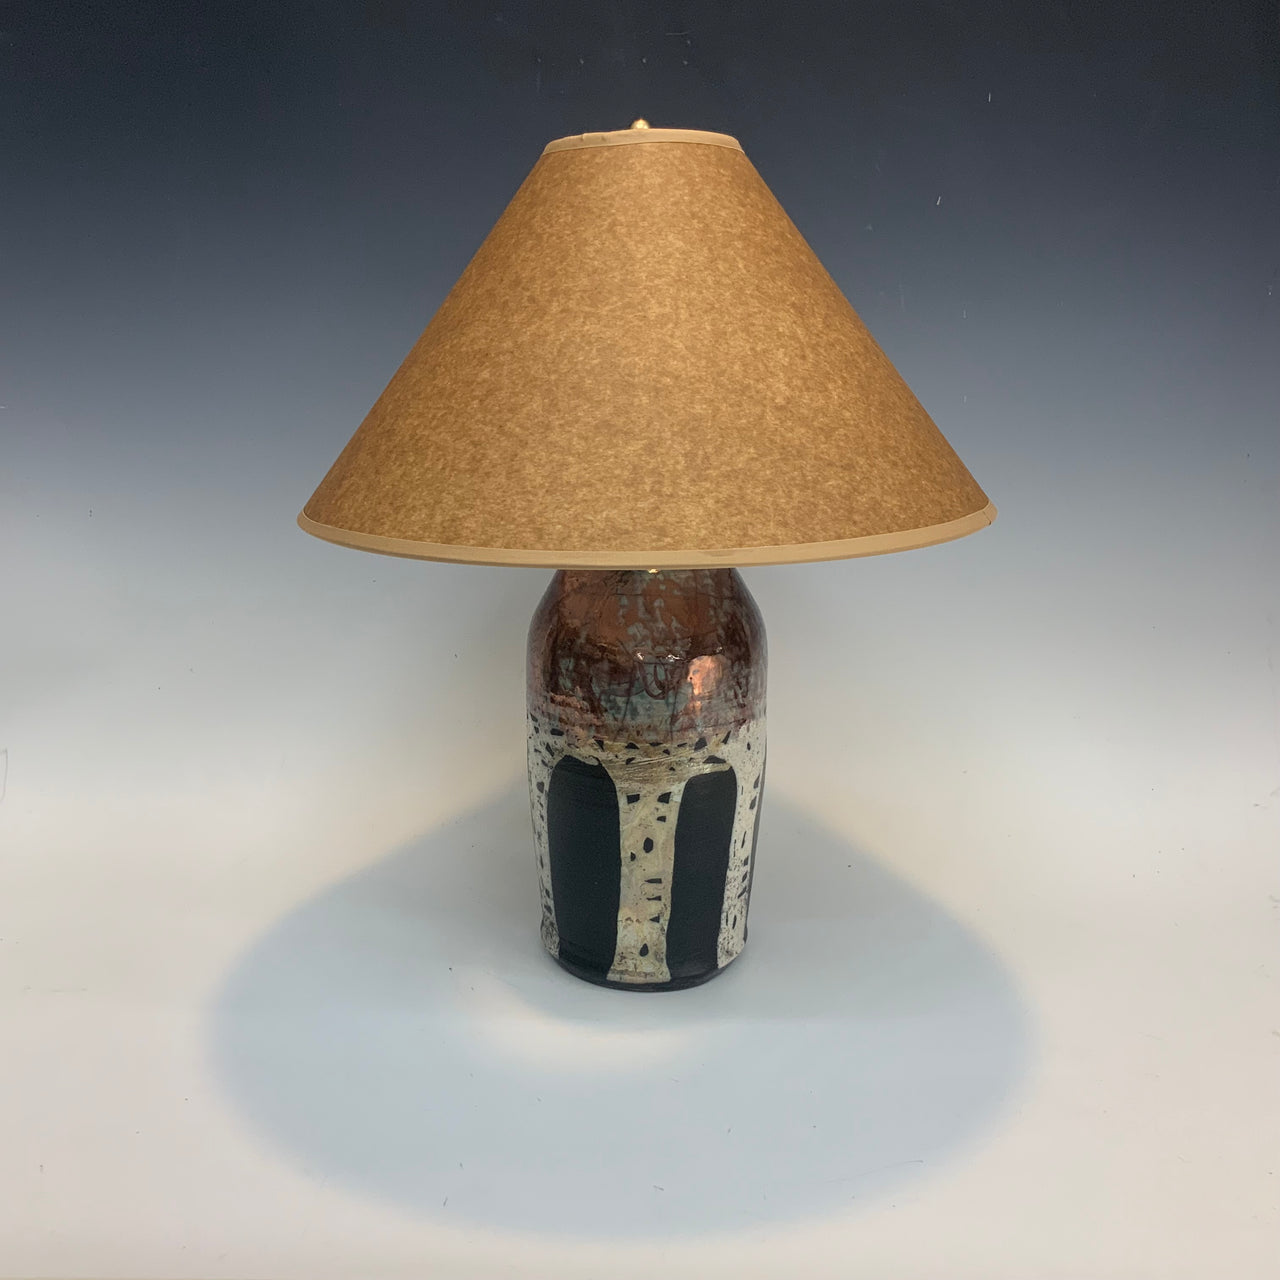 Small Raku Lamp with Aspen Trees